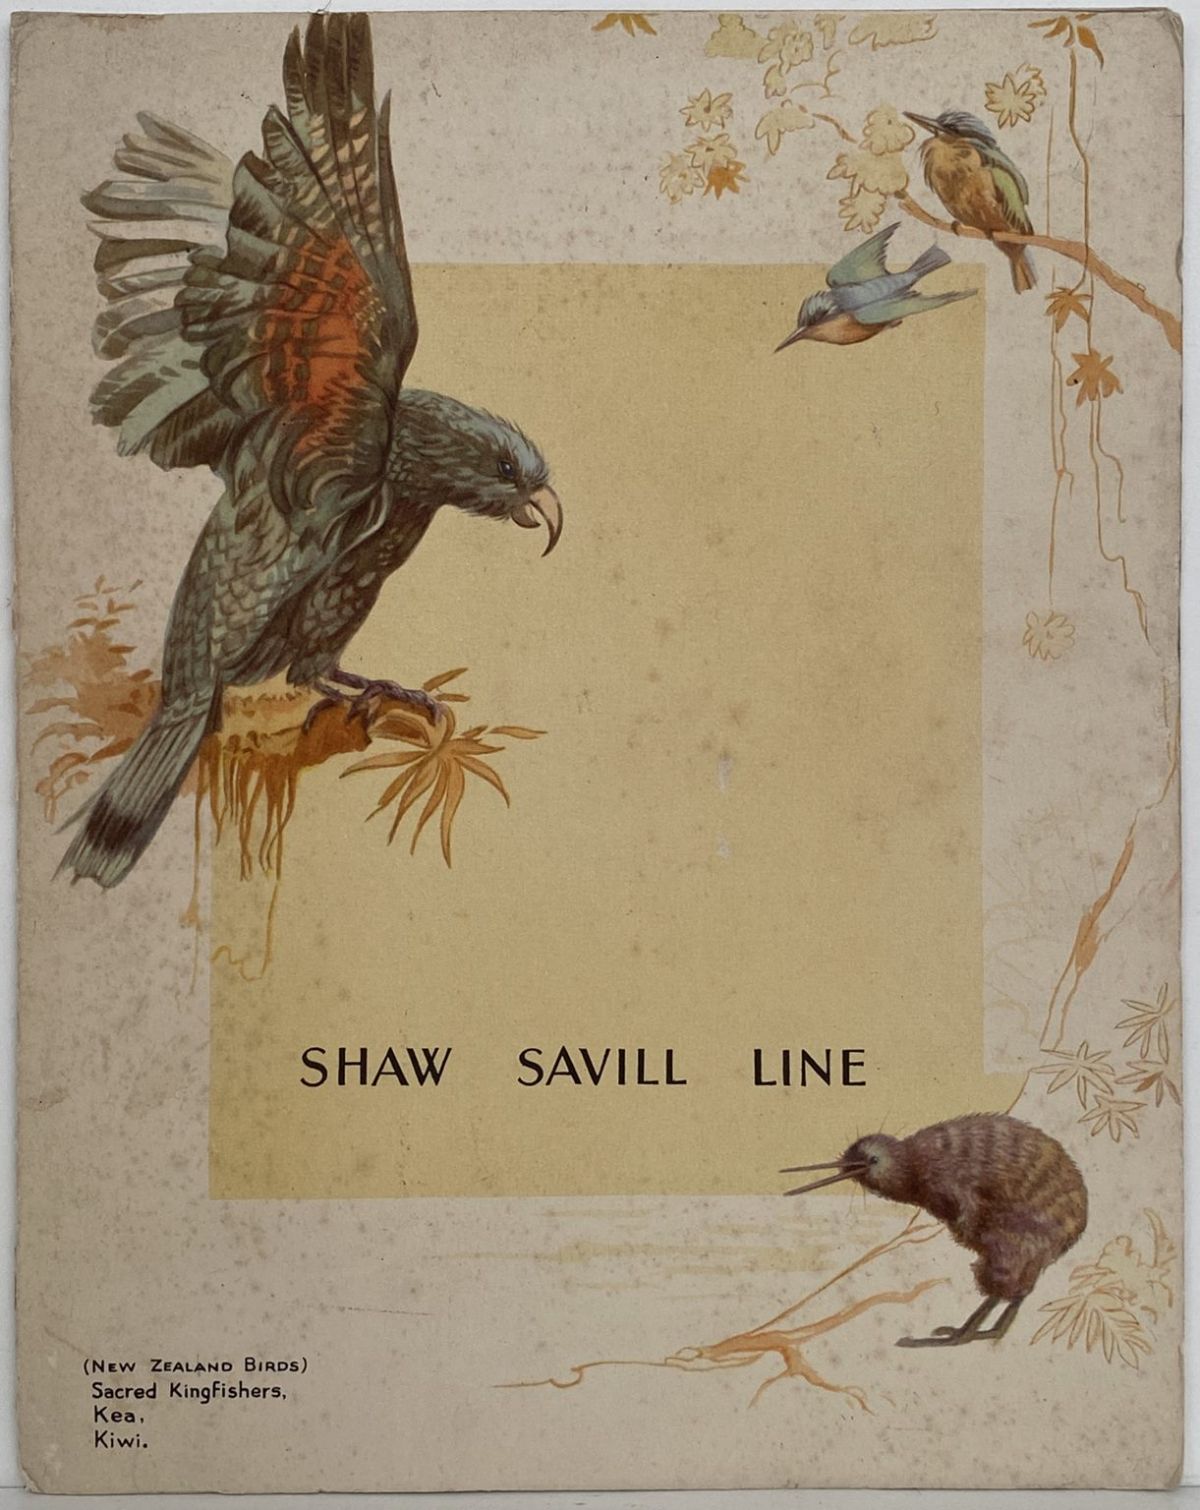 MARITIME MEMORABILIA: Shaw Savill Line - R.M.S. Akaroa - Dinner Menu 1948